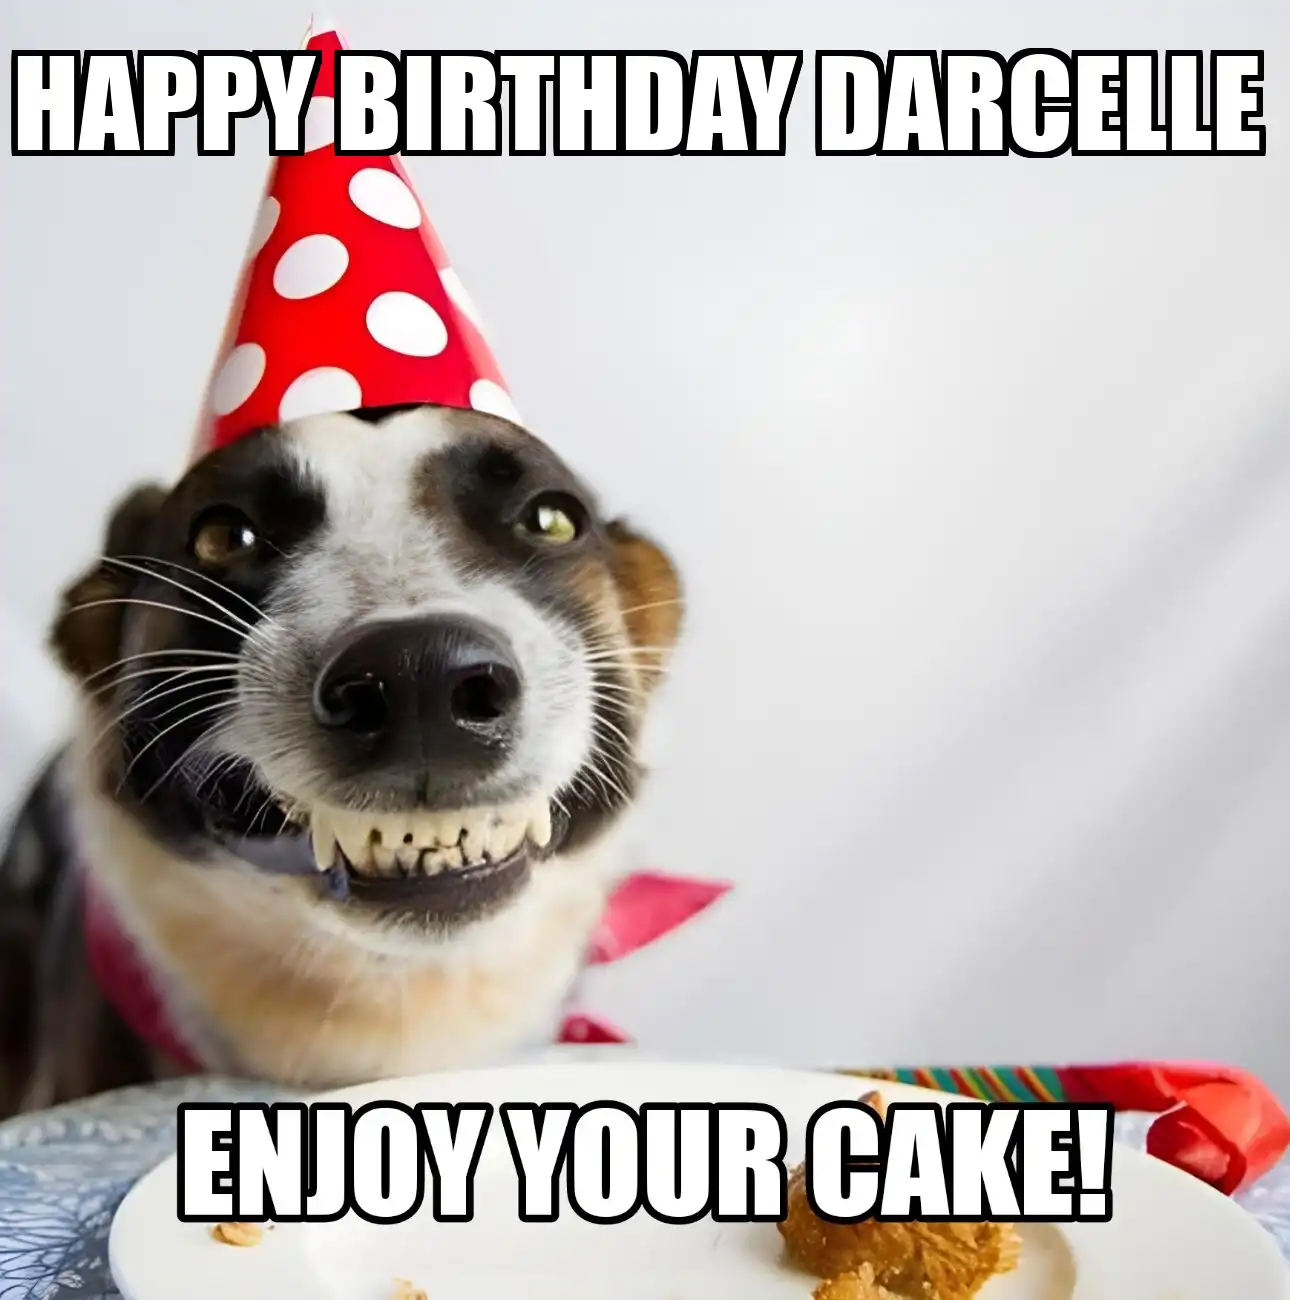 Happy Birthday Darcelle Enjoy Your Cake Dog Meme